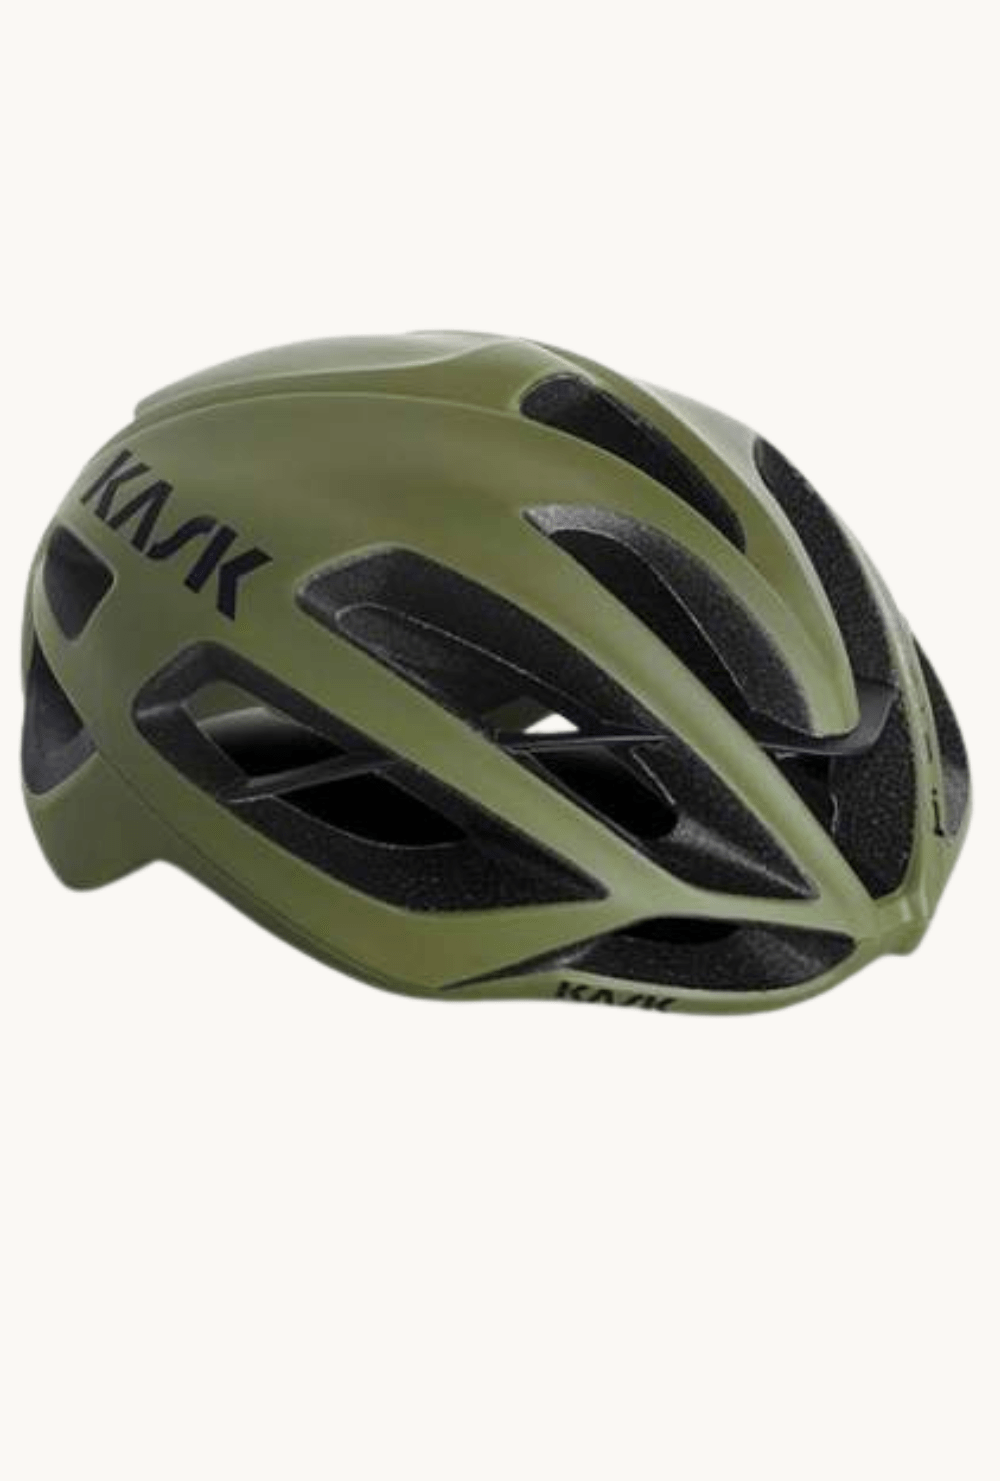 Helmet - Kask Protone Matt Olivelarge (59-62cm) / Matt Olive